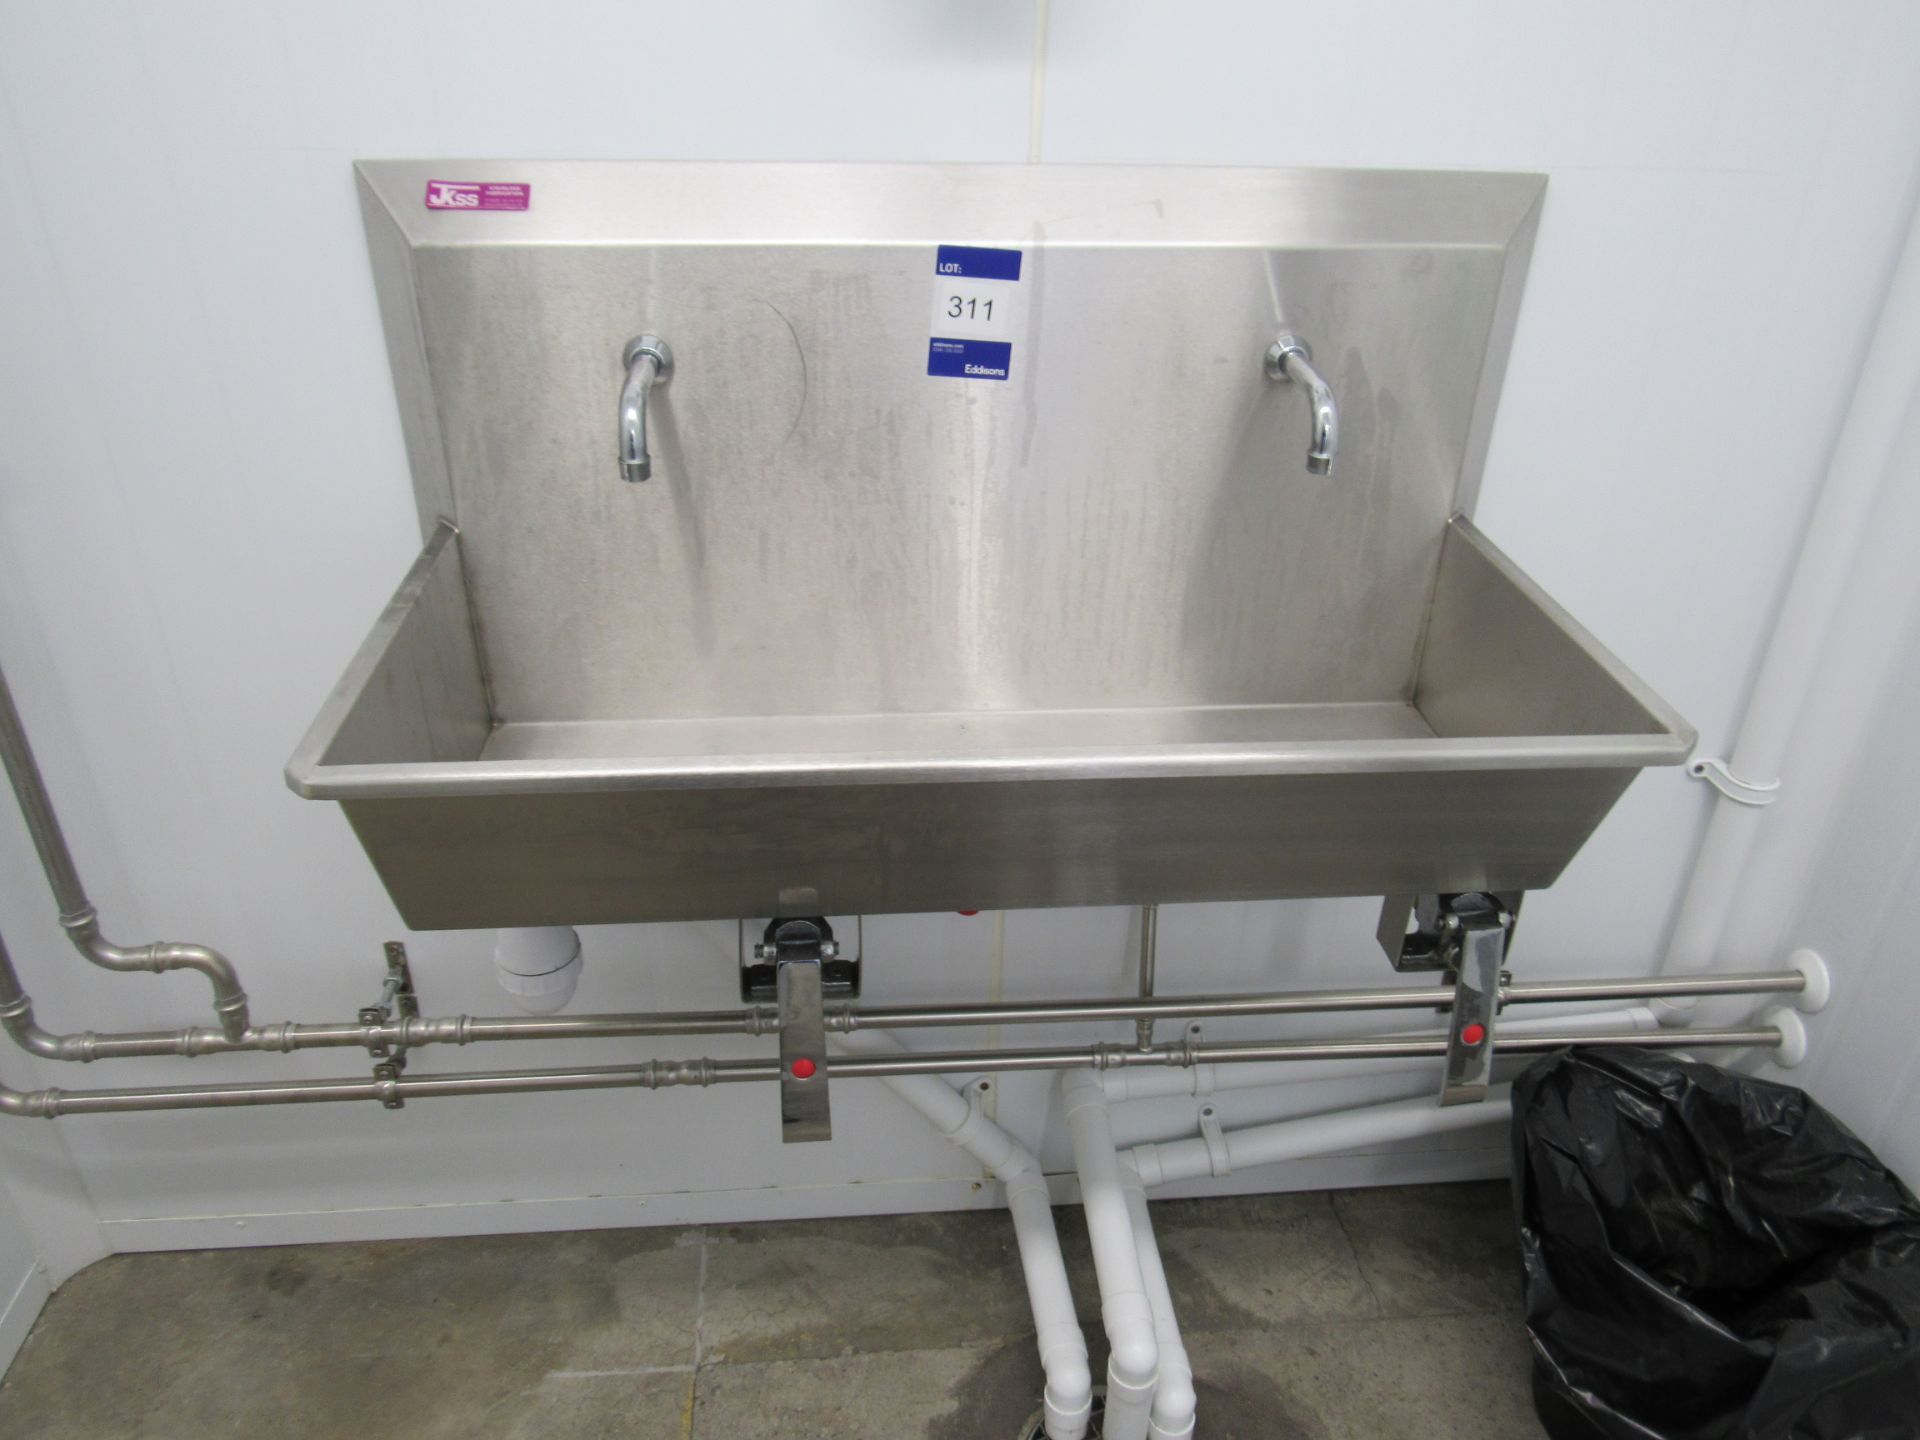 Stainless steel JK55 knee operated sink - Image 2 of 2